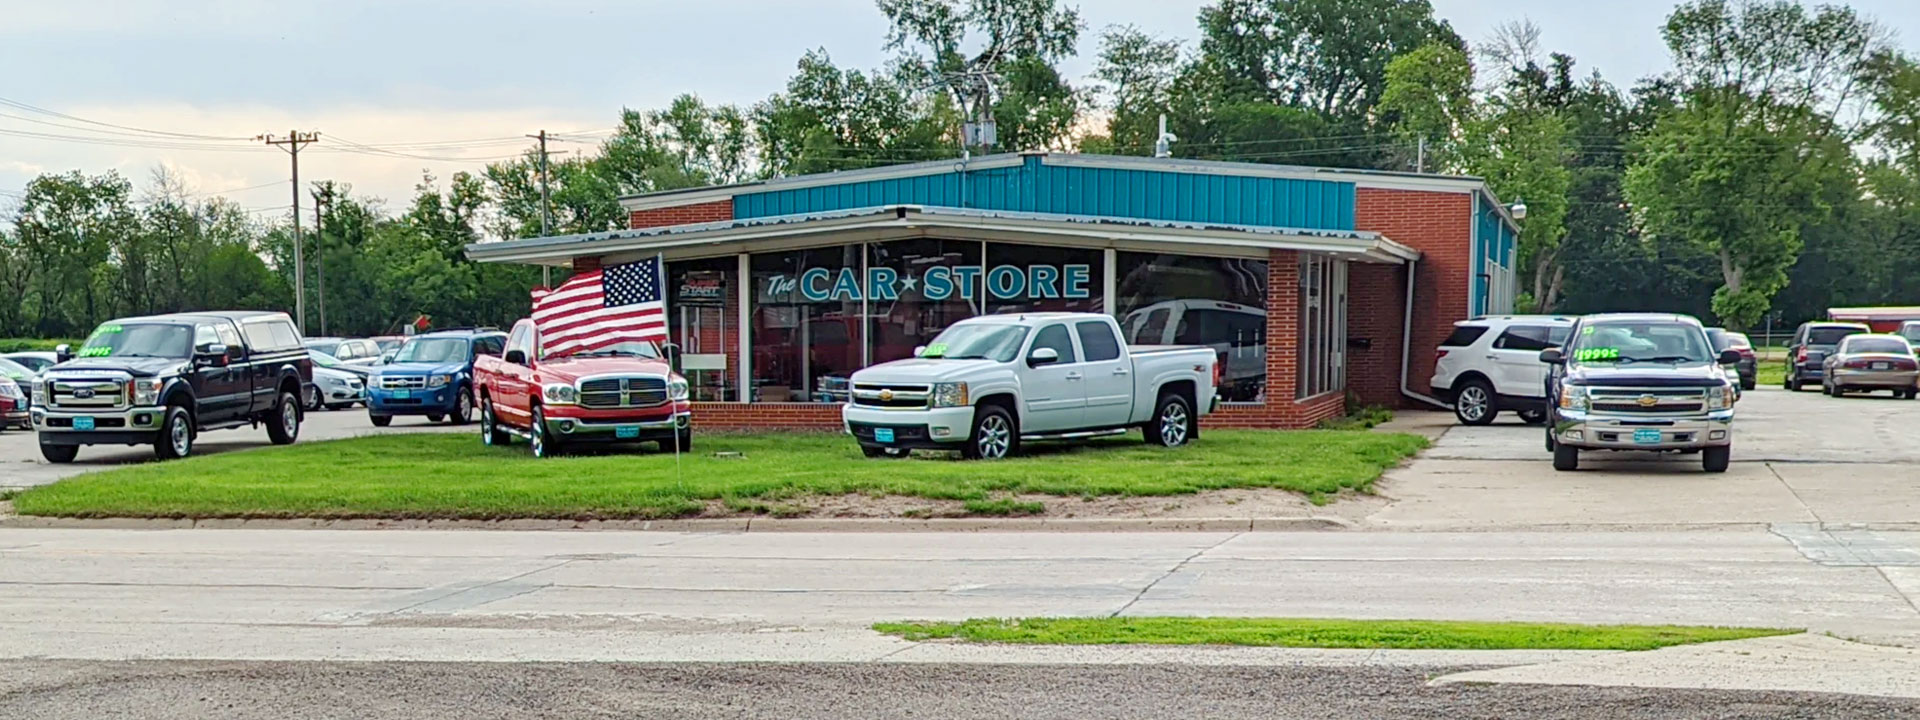 The Car Store Iowa